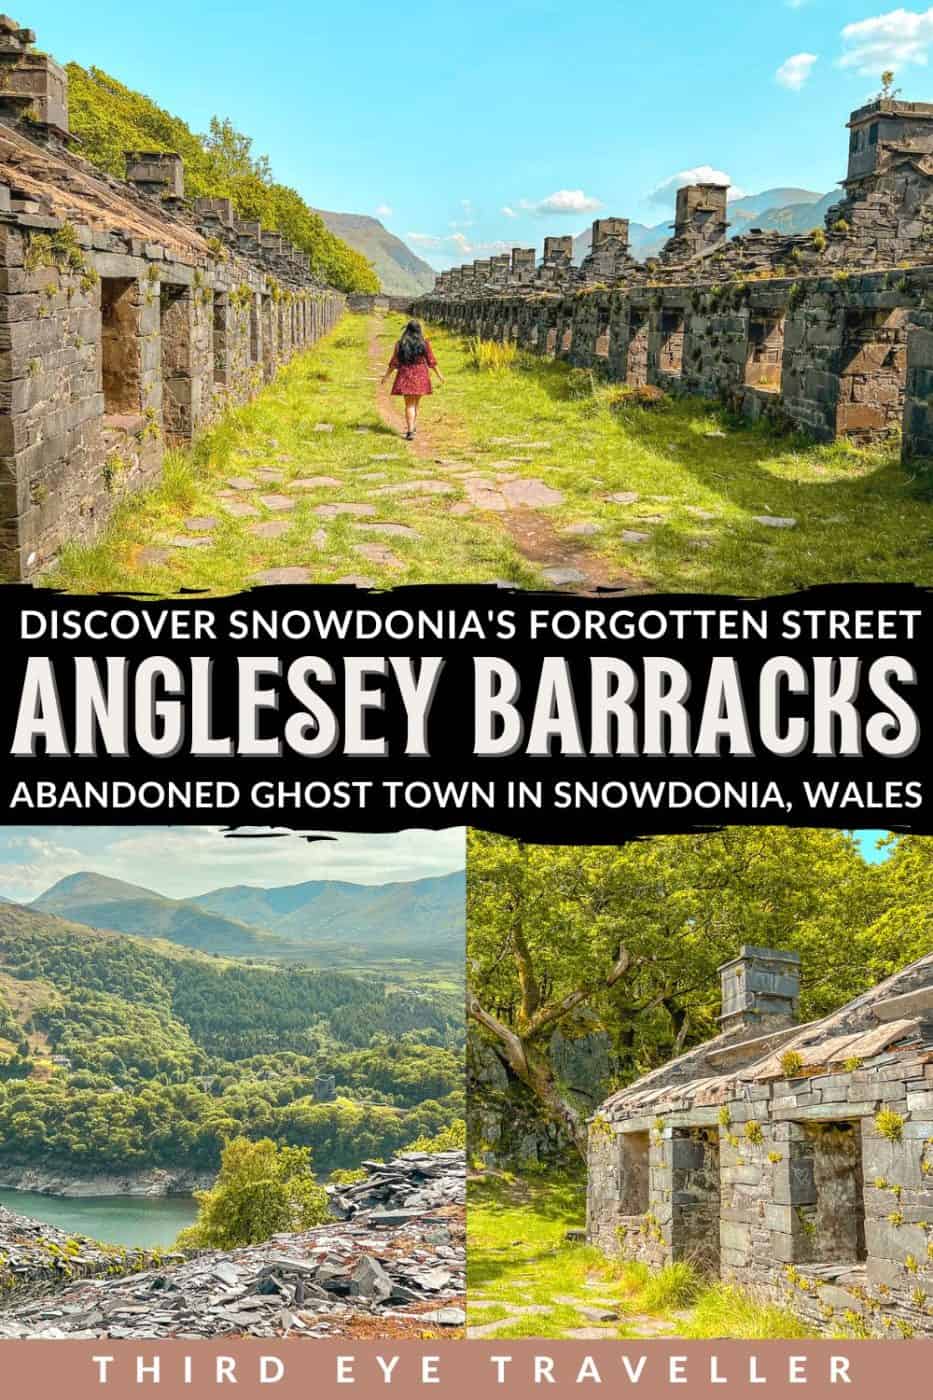 Anglesey-Barracks-Forgotten-Street-Snowdonia-Wales